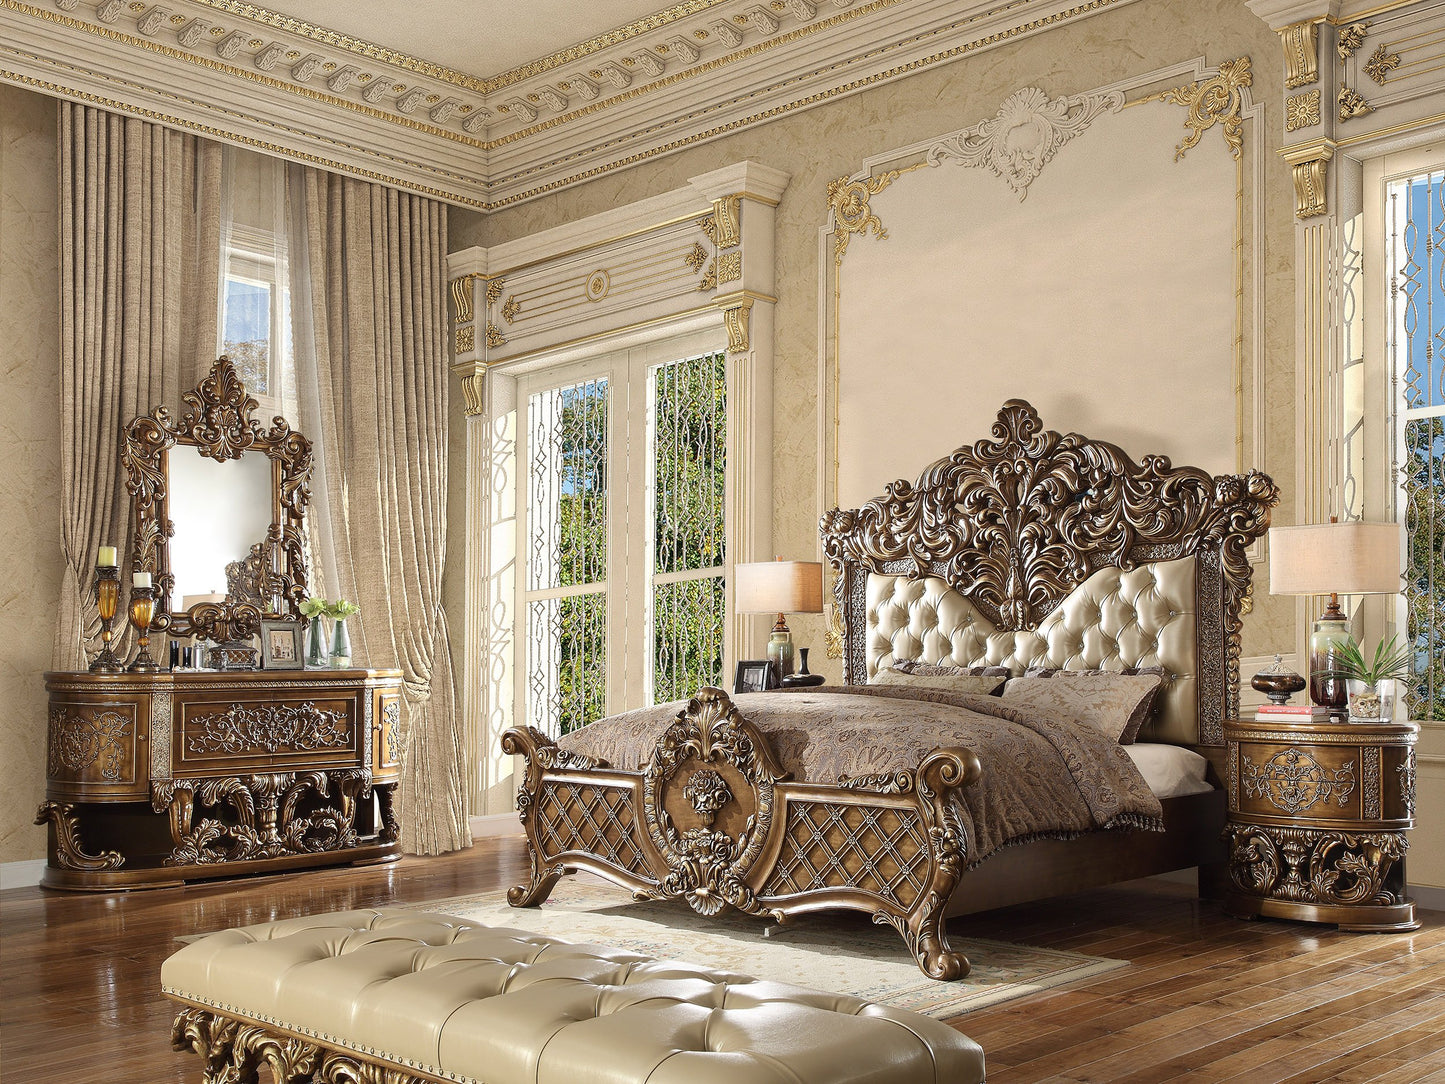 Leather E King 5PC Bedroom Set in Antique Gold & Brown Finish EK8018-5PC